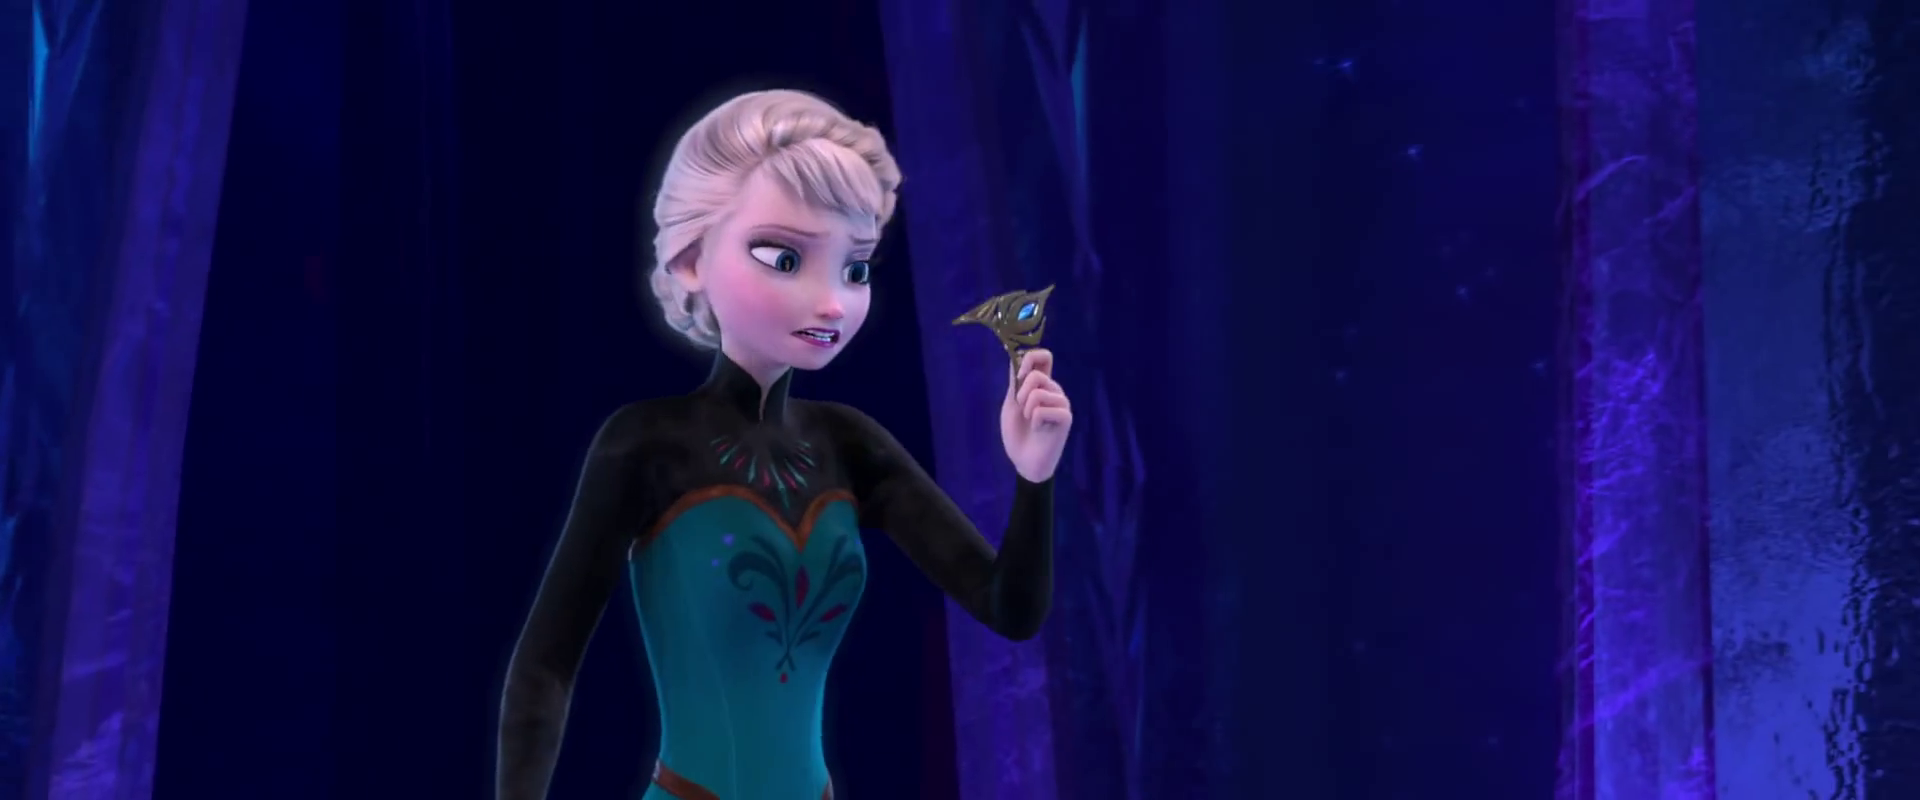 Elsa Frozen Frozen Movie 1920x800